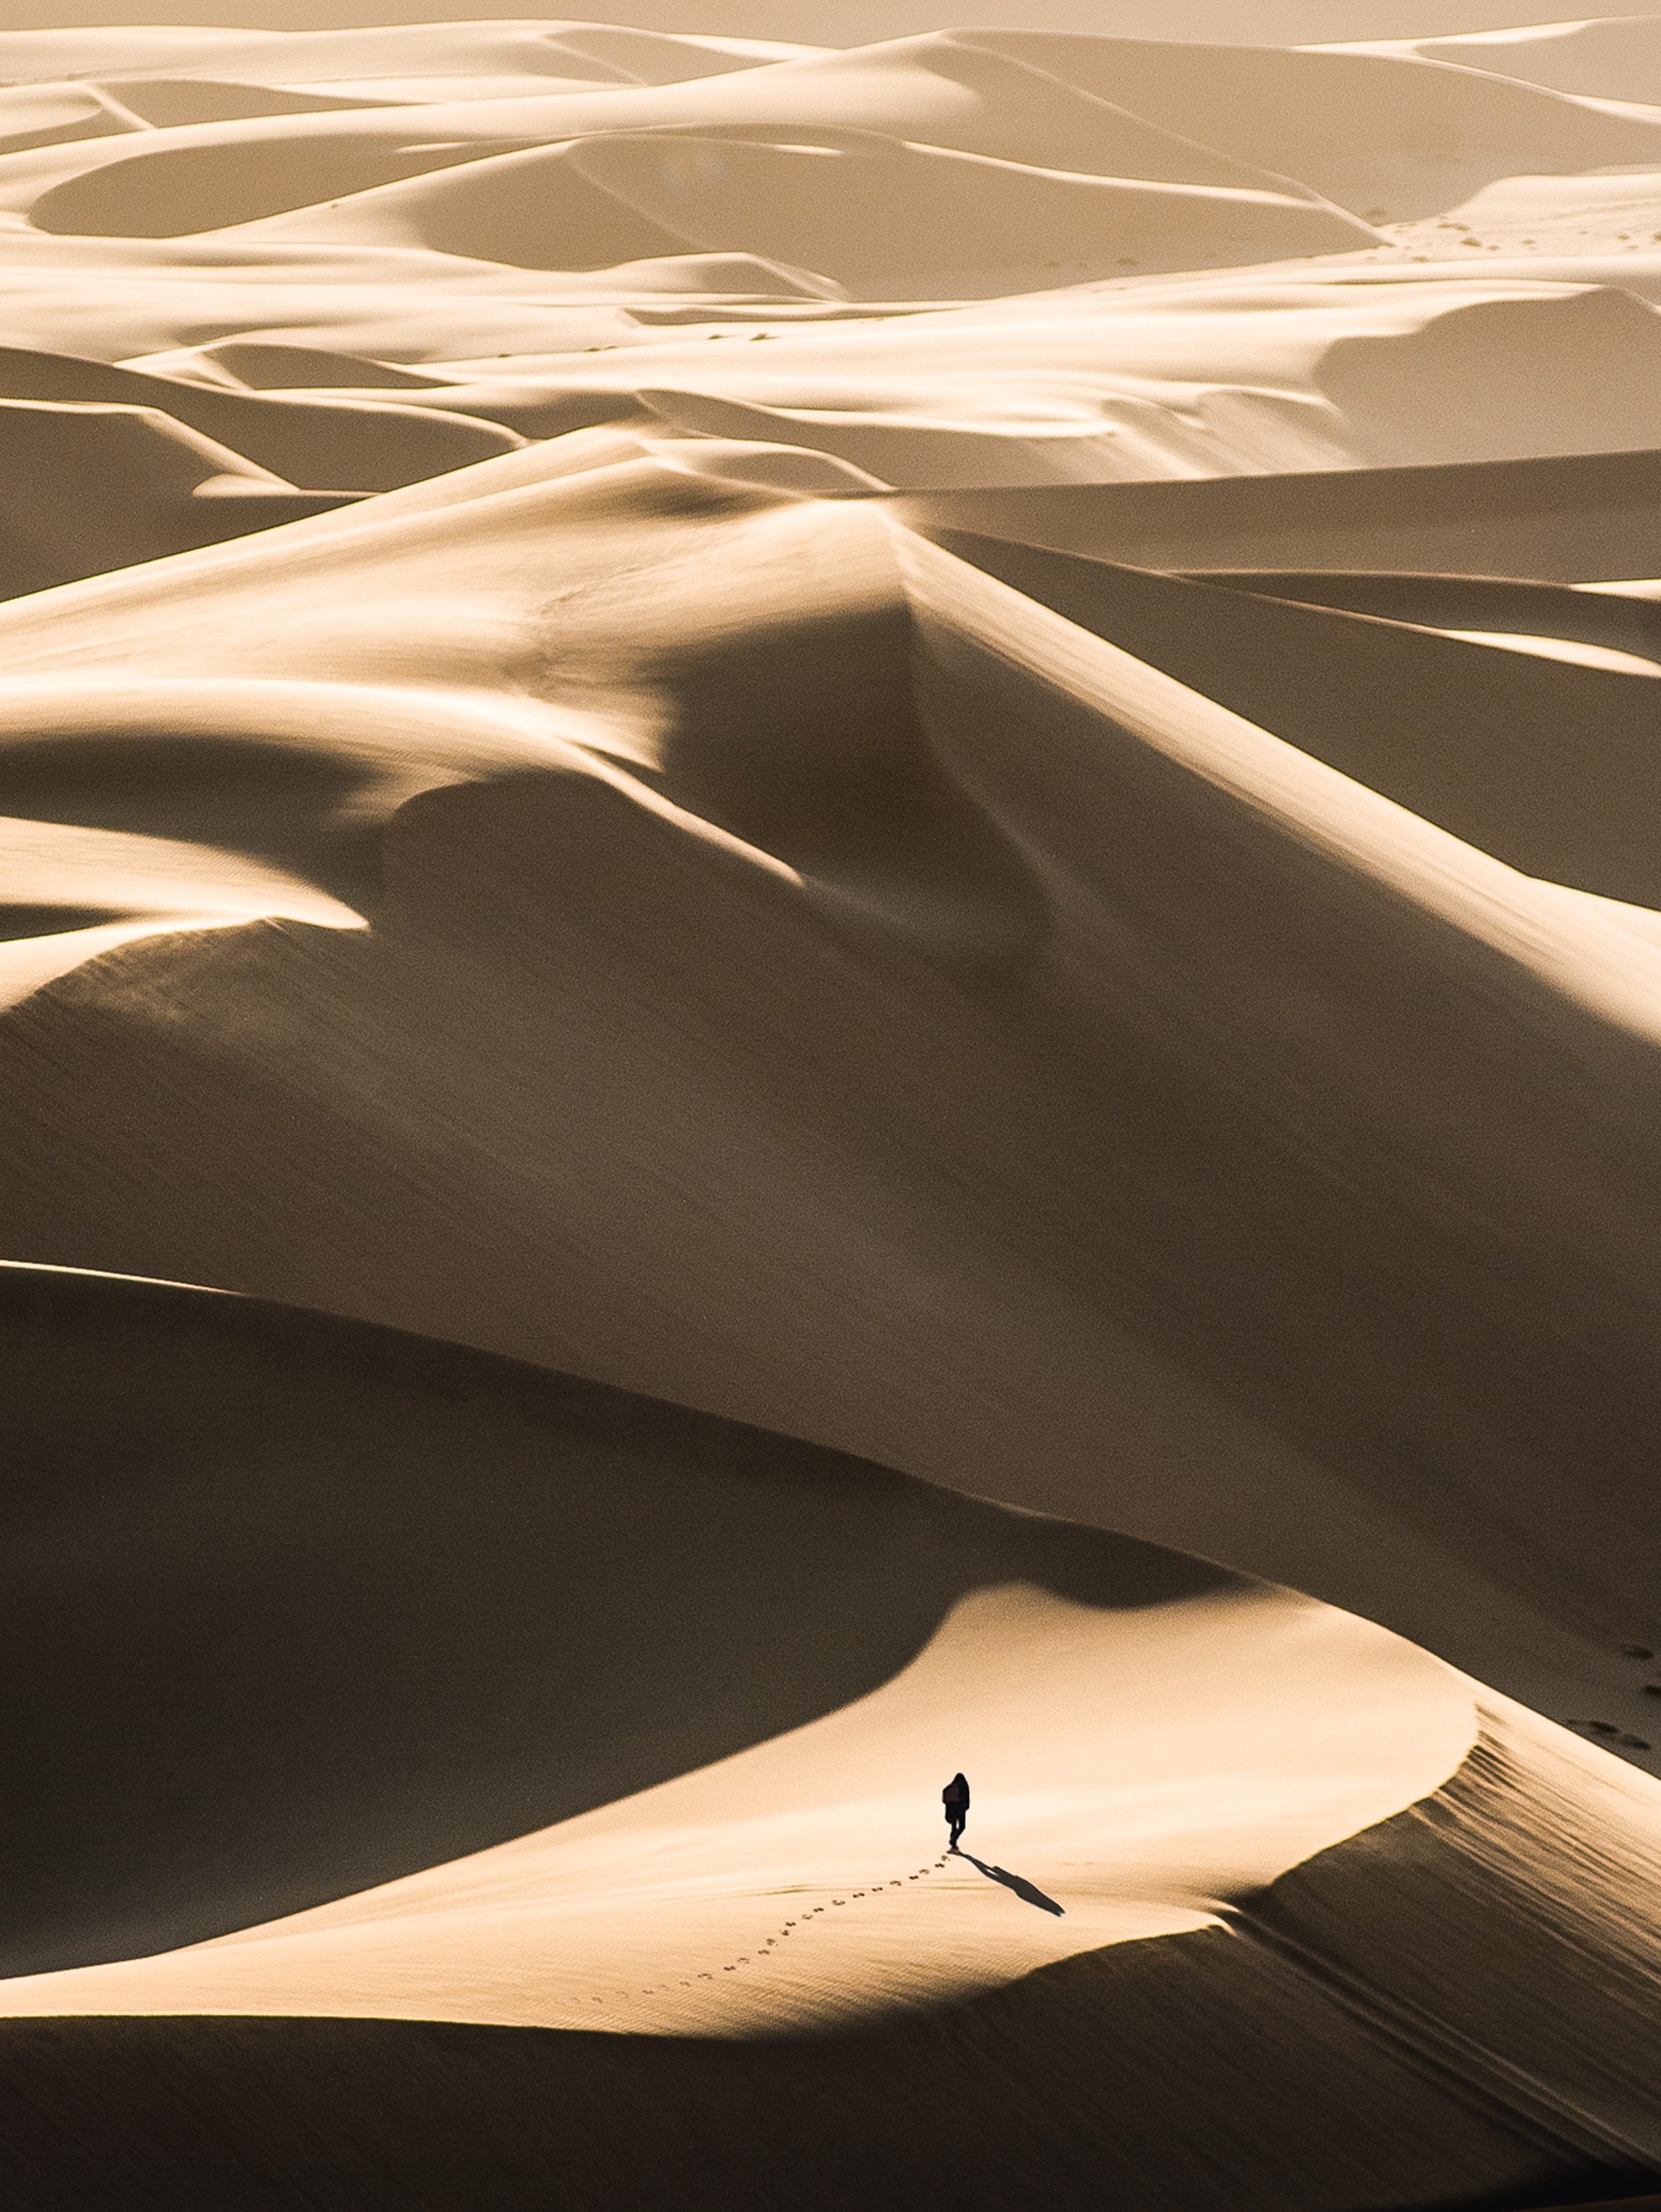 desert, alone, links, nature, sand, silhouette, lonely, dunes, wanderer